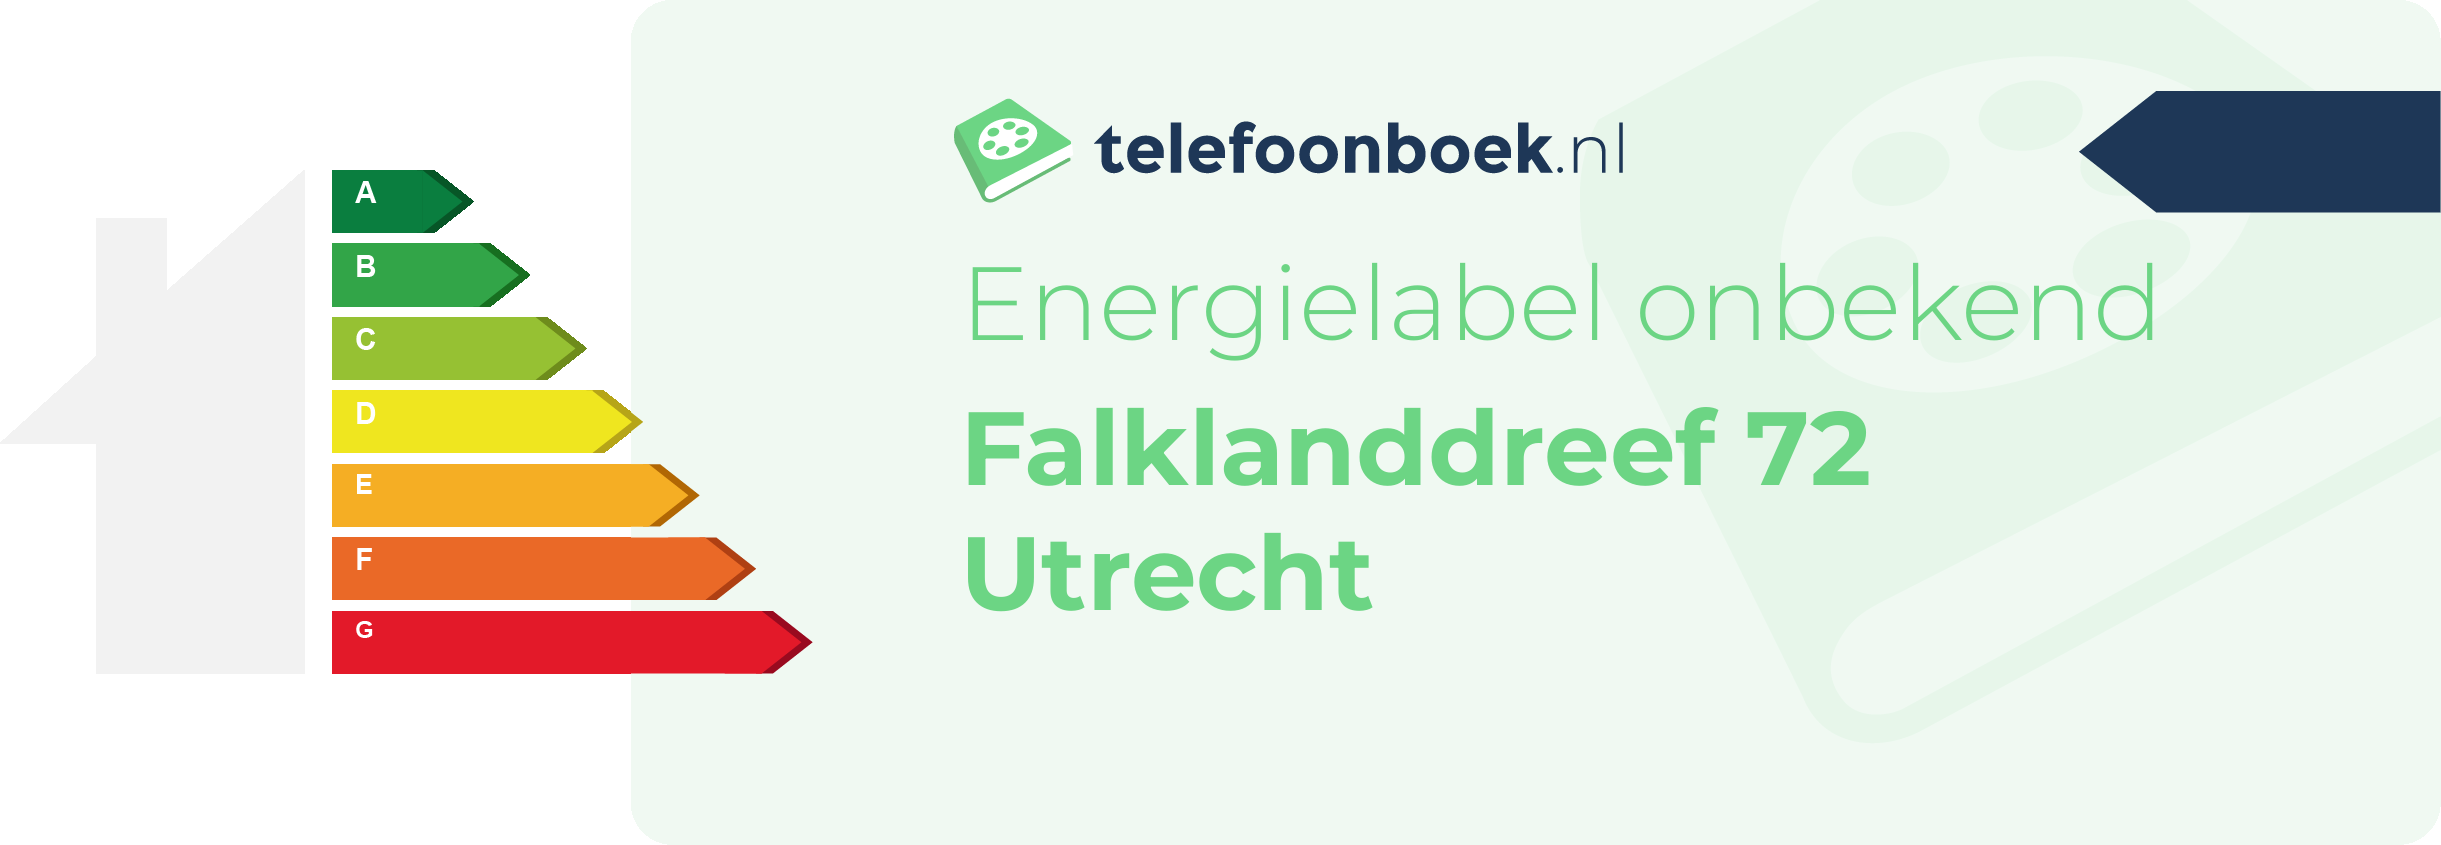 Energielabel Falklanddreef 72 Utrecht